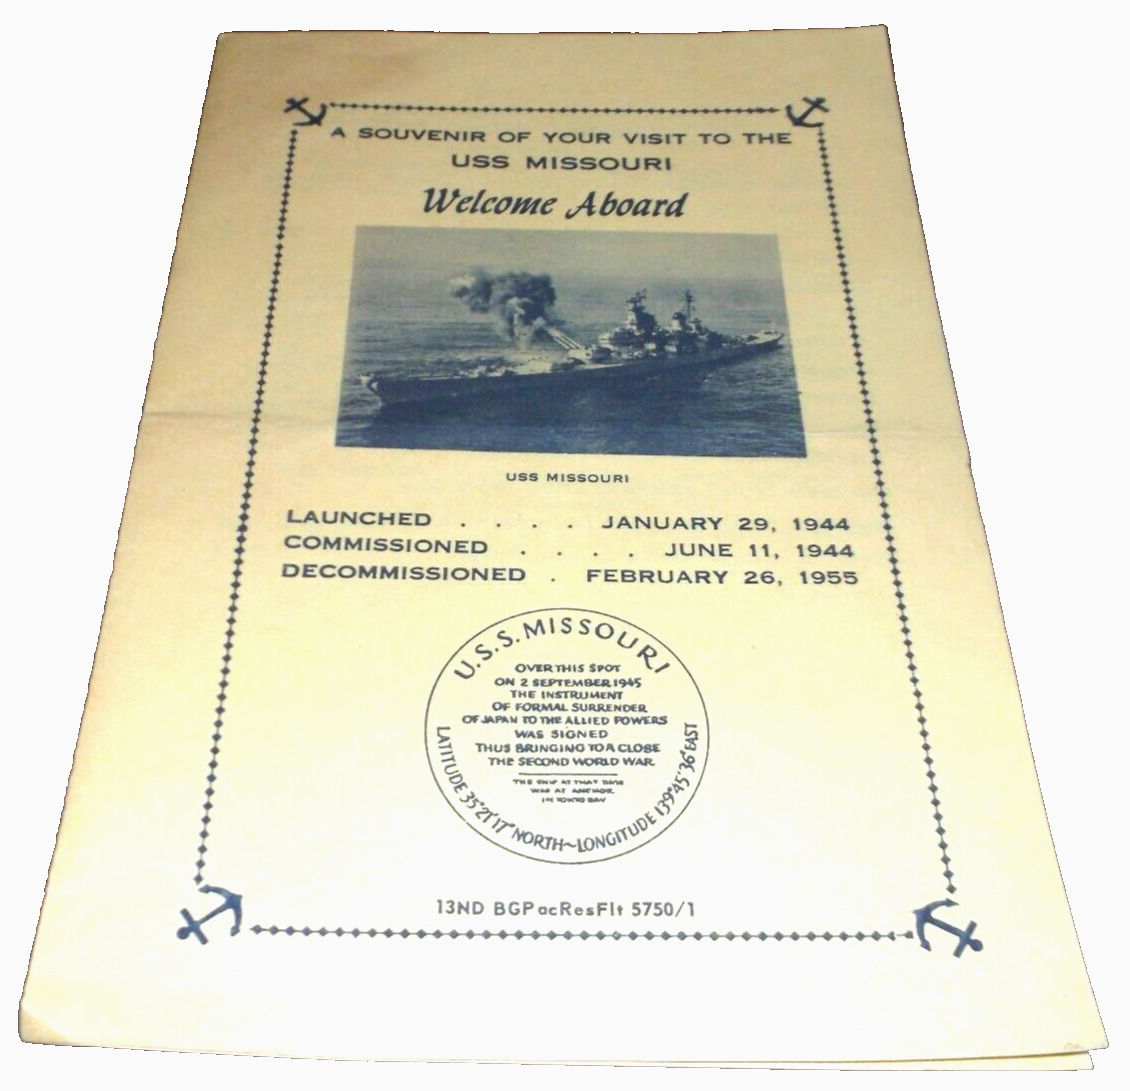 1966 USS MISSOURI WELCOME ABOARD SOUVENIR BROCHURE